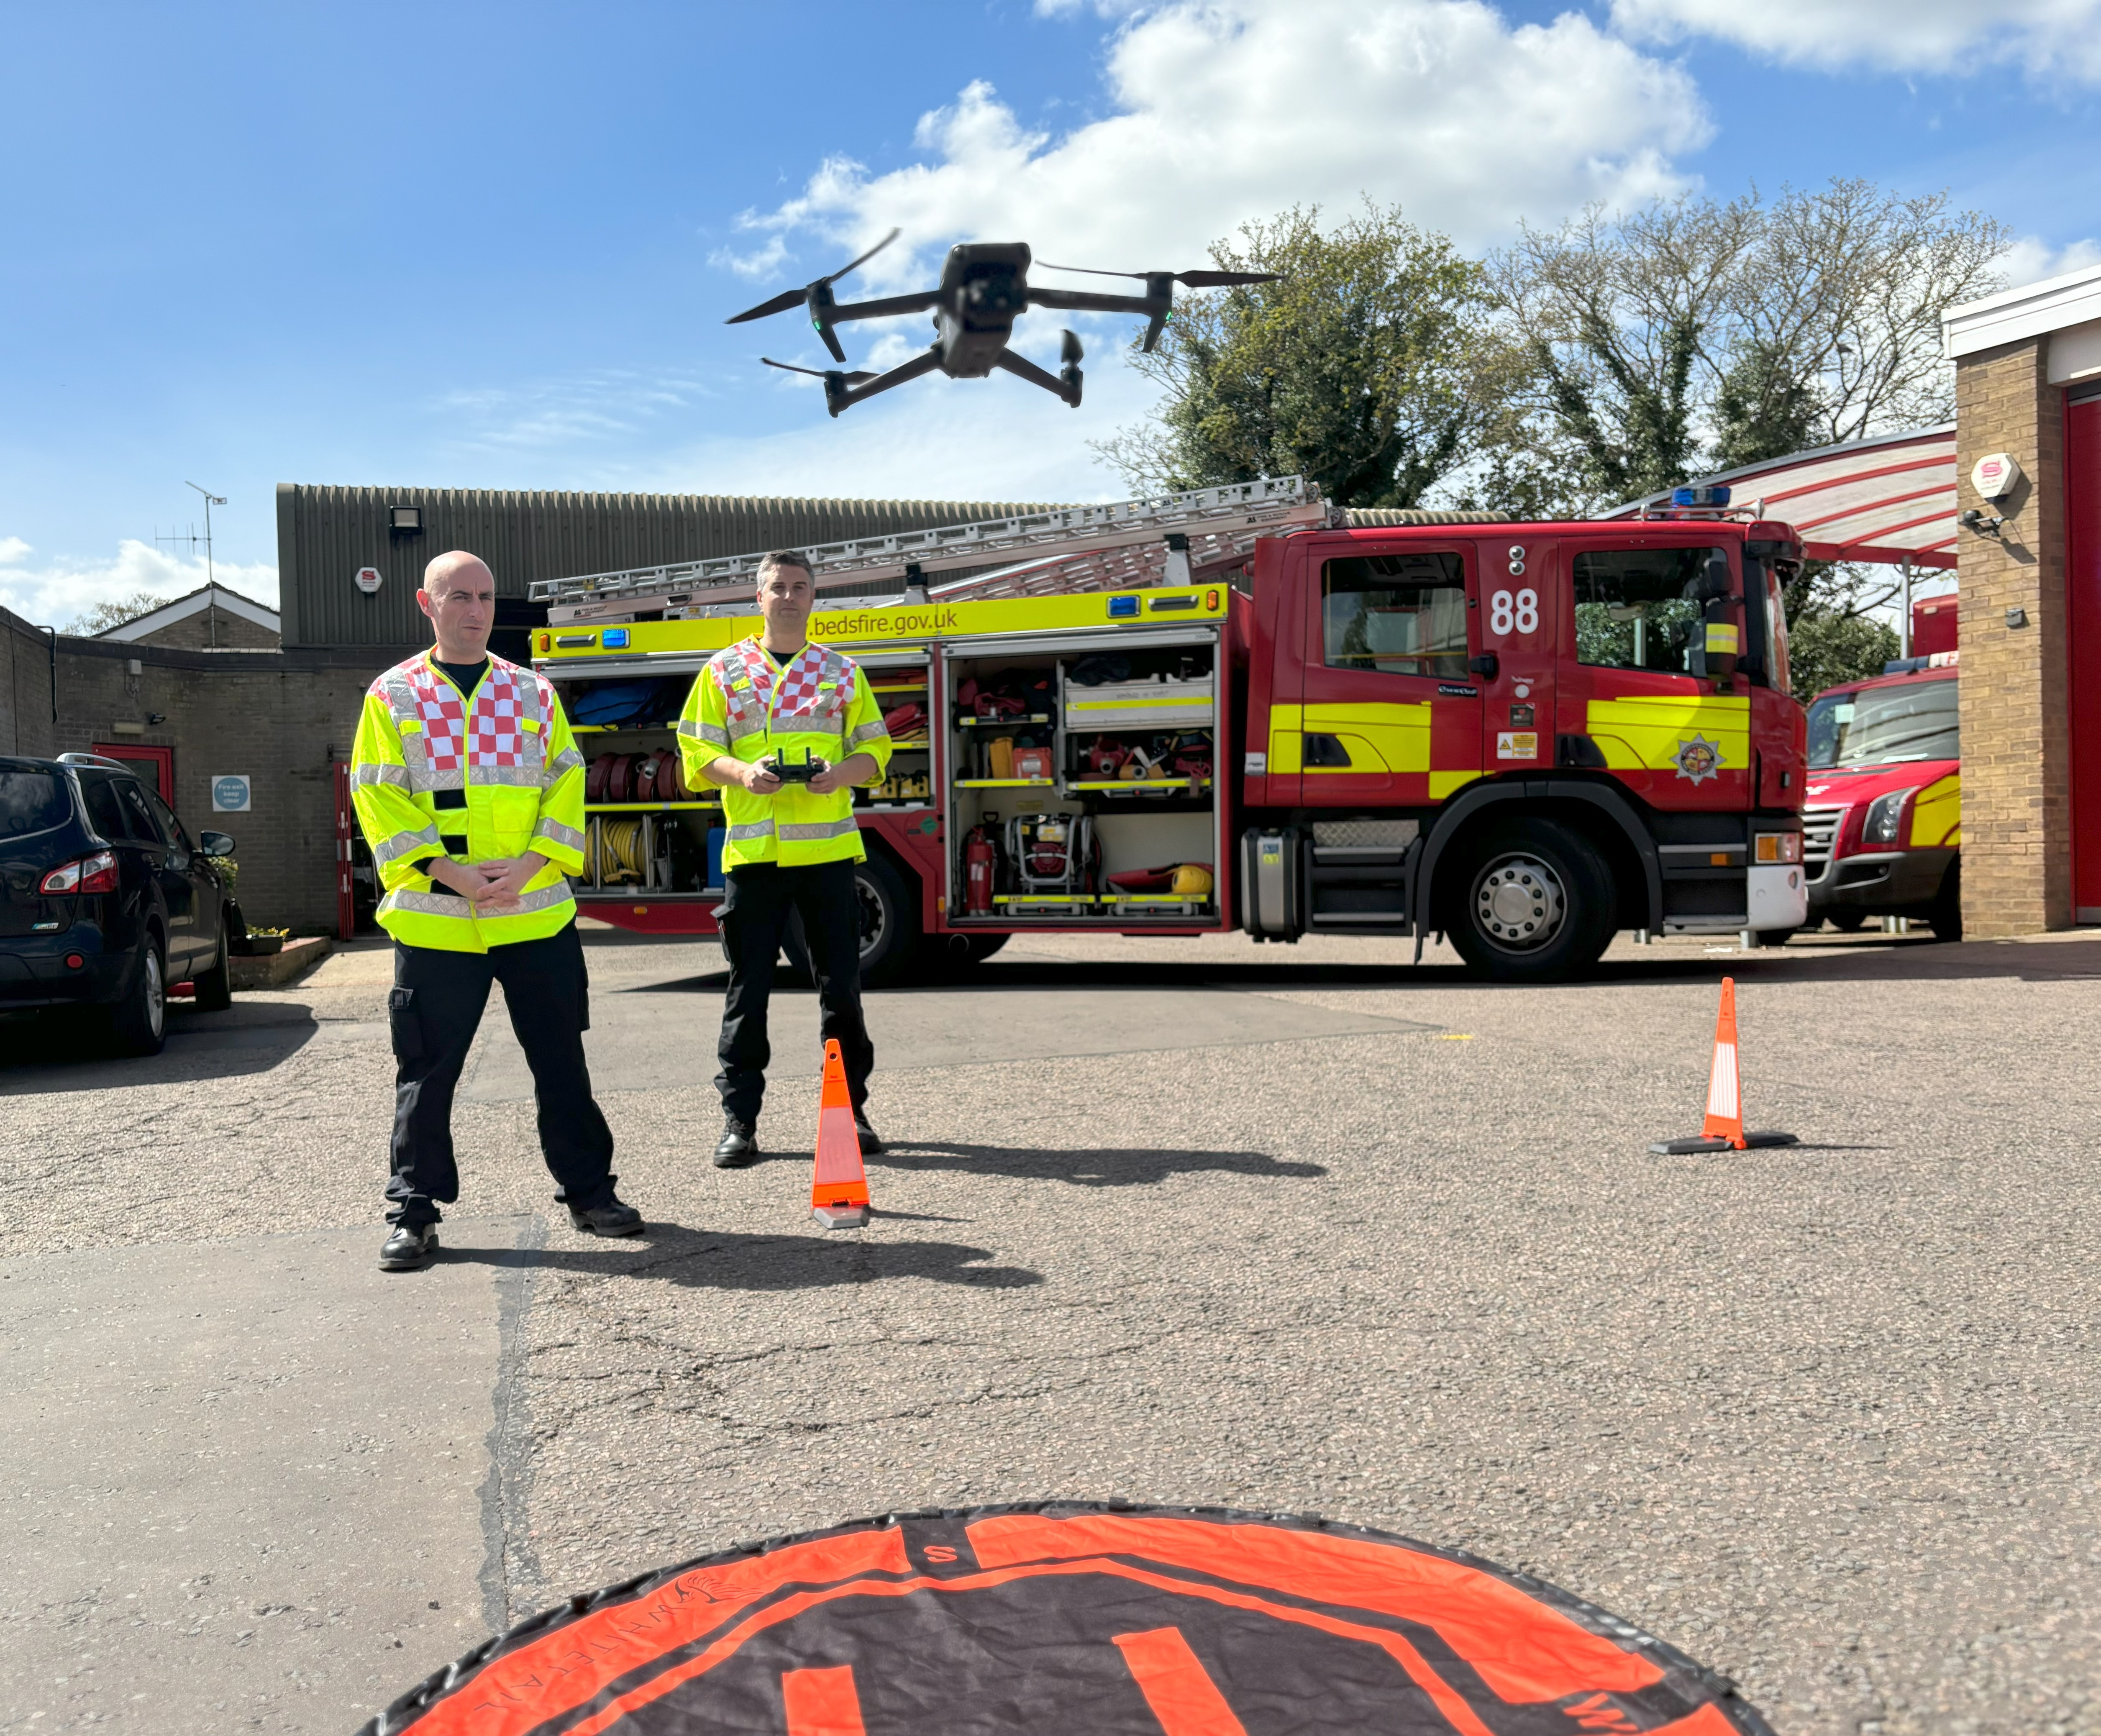 Drone at Leighton Buzzard fire station